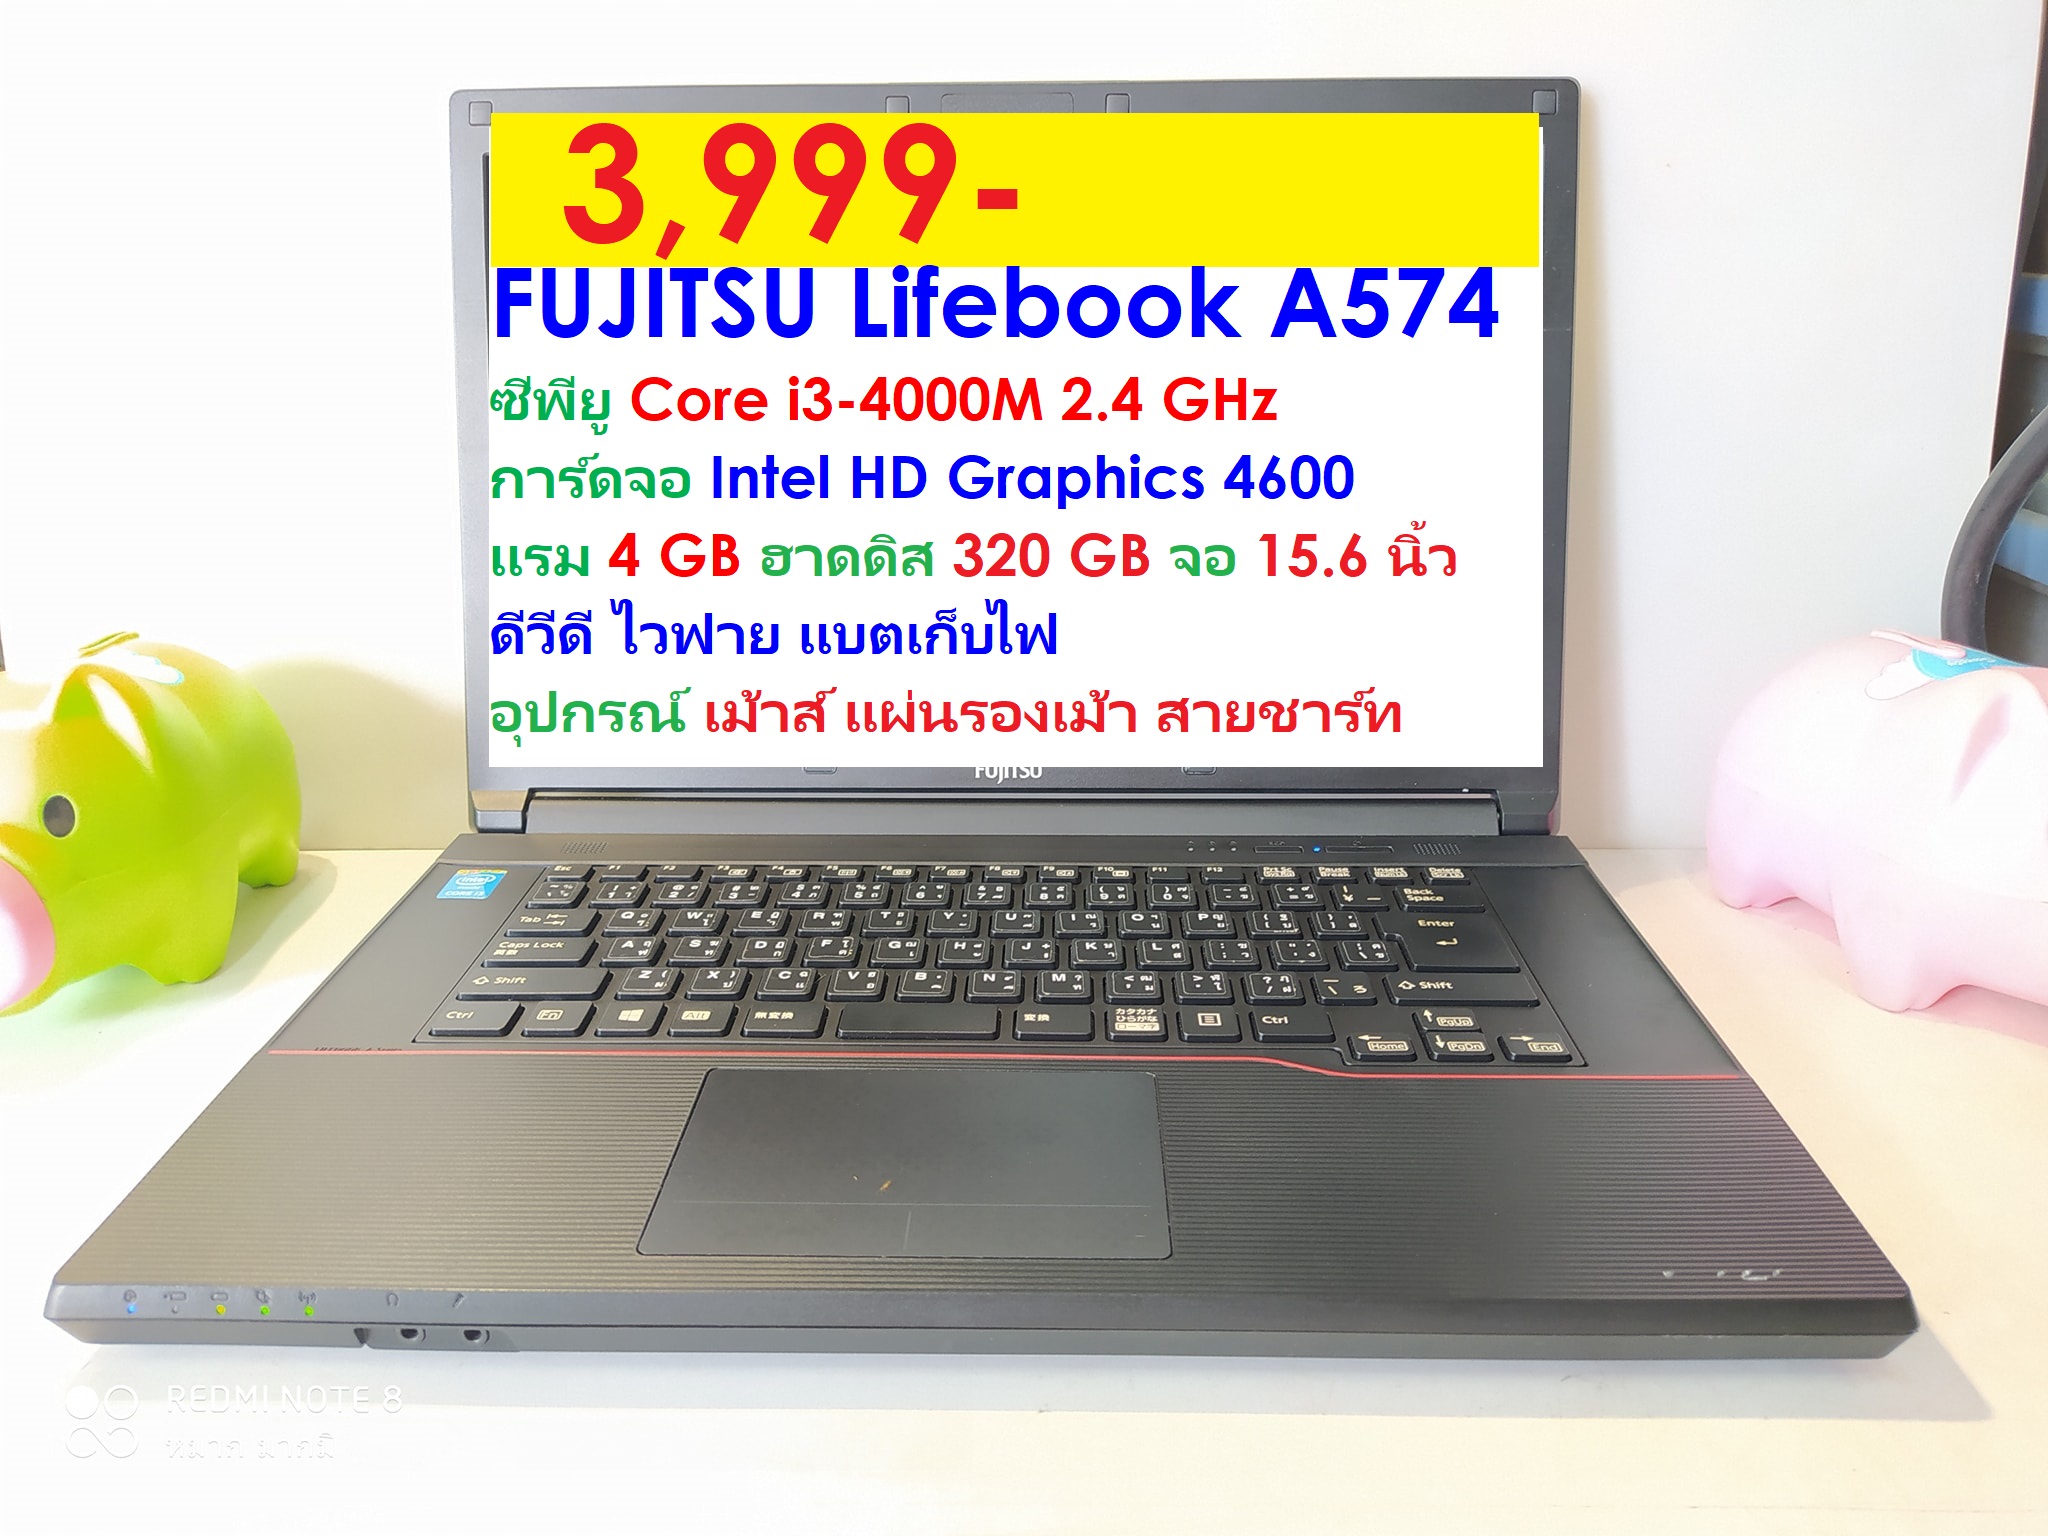 FUJITSU Lifebook A574  ซีพียู Core i3-4000M 2.4 GHz  การ์ดจอ Intel HD Graphics 4600  แรม 4 GB   ฮาดดิส 320 GB   จอ 15.6 นิ้ว  ดีวีดี ไวฟาย   แบตเก็บไฟ   อุปกรณ์ เม้าส์ แผ่นรองเม้า สายชาร์ท  วีดีโอ รีวิว ตามลิ้งค์ด้านล่างนี้เลยครับ   https://www.facebook.com/IT.eletronic/videos/312274974247289/  ราคาที่ 3,999 บาท เก็บปลายทางโอนมัดจำ 400 บาท  ธ.กสิกรไทย 155-235-062-2 จักรินทร์ มากมี ------------------------------------ Face : หมาก มากมี โทร : 0872078533 Line : mark0872078533 ร้าน : ไอที อิเล็กทรอนิกส์ 2 160/70 ถ.เติบศิริ ต.อุทัยใหม่ อ เมือง จ อุทัยธานี 61000 รูปที่ 1